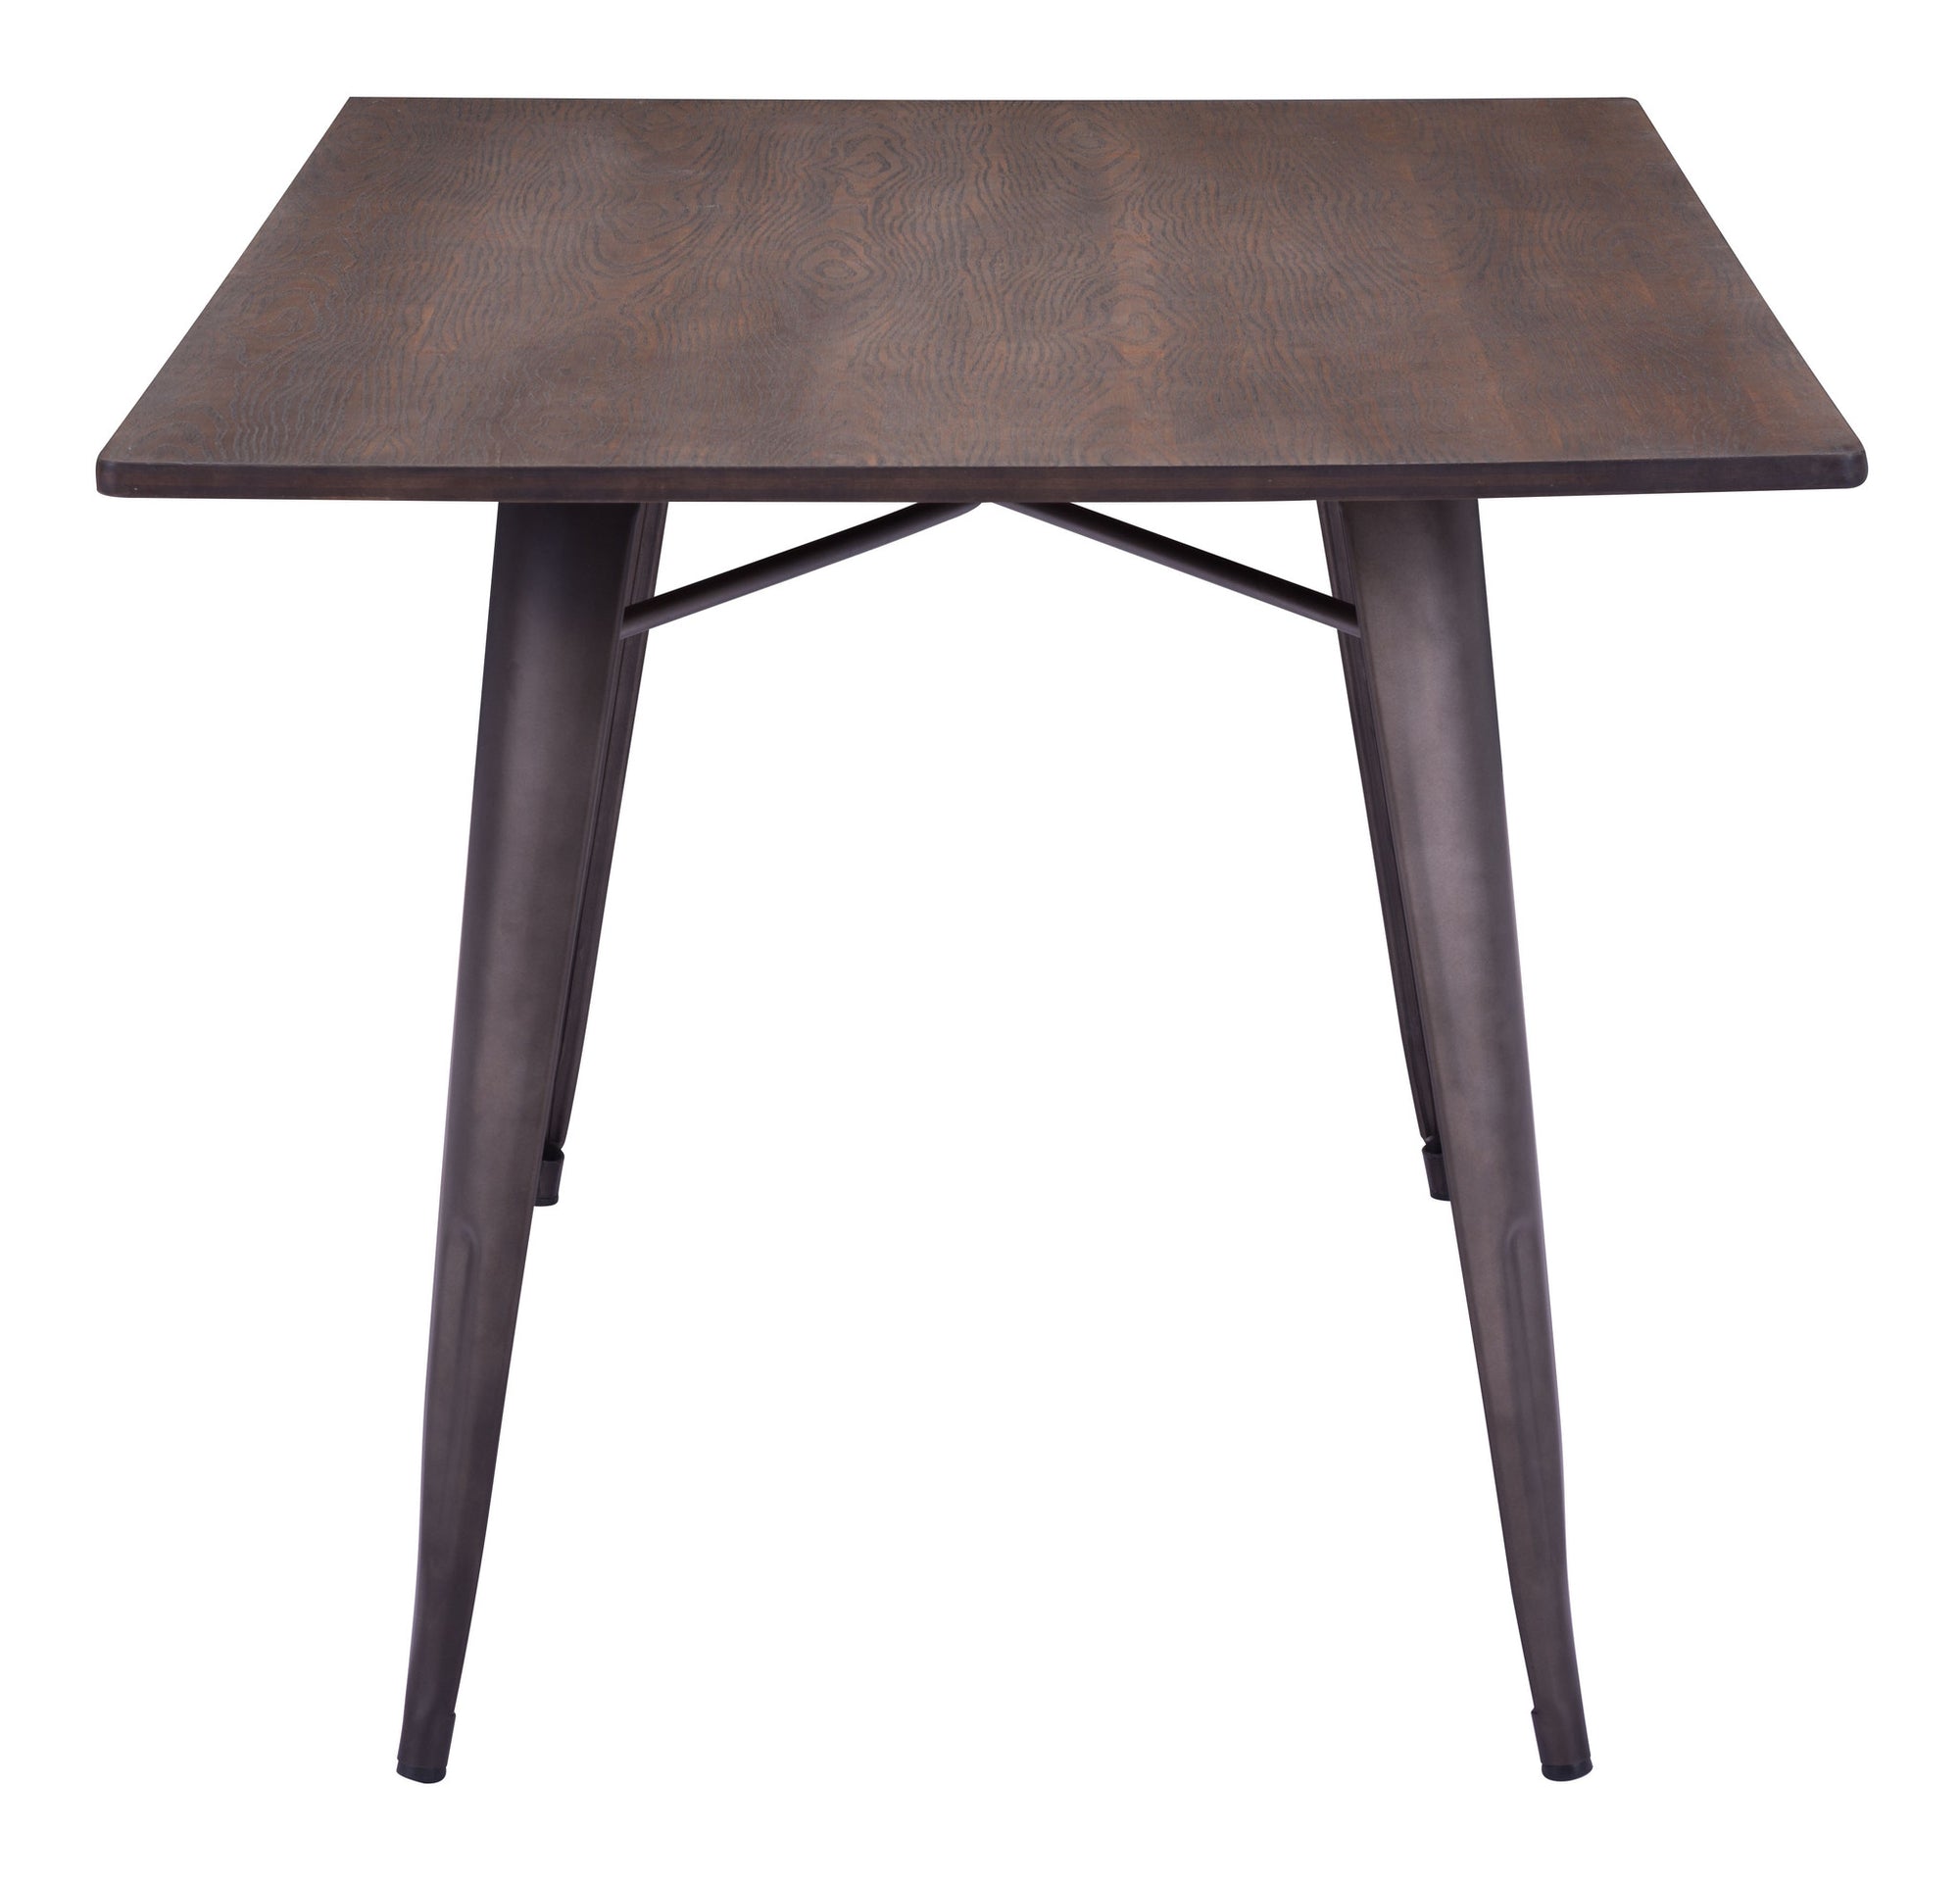 Tauton Rectangular Dining Table Rustic Wood